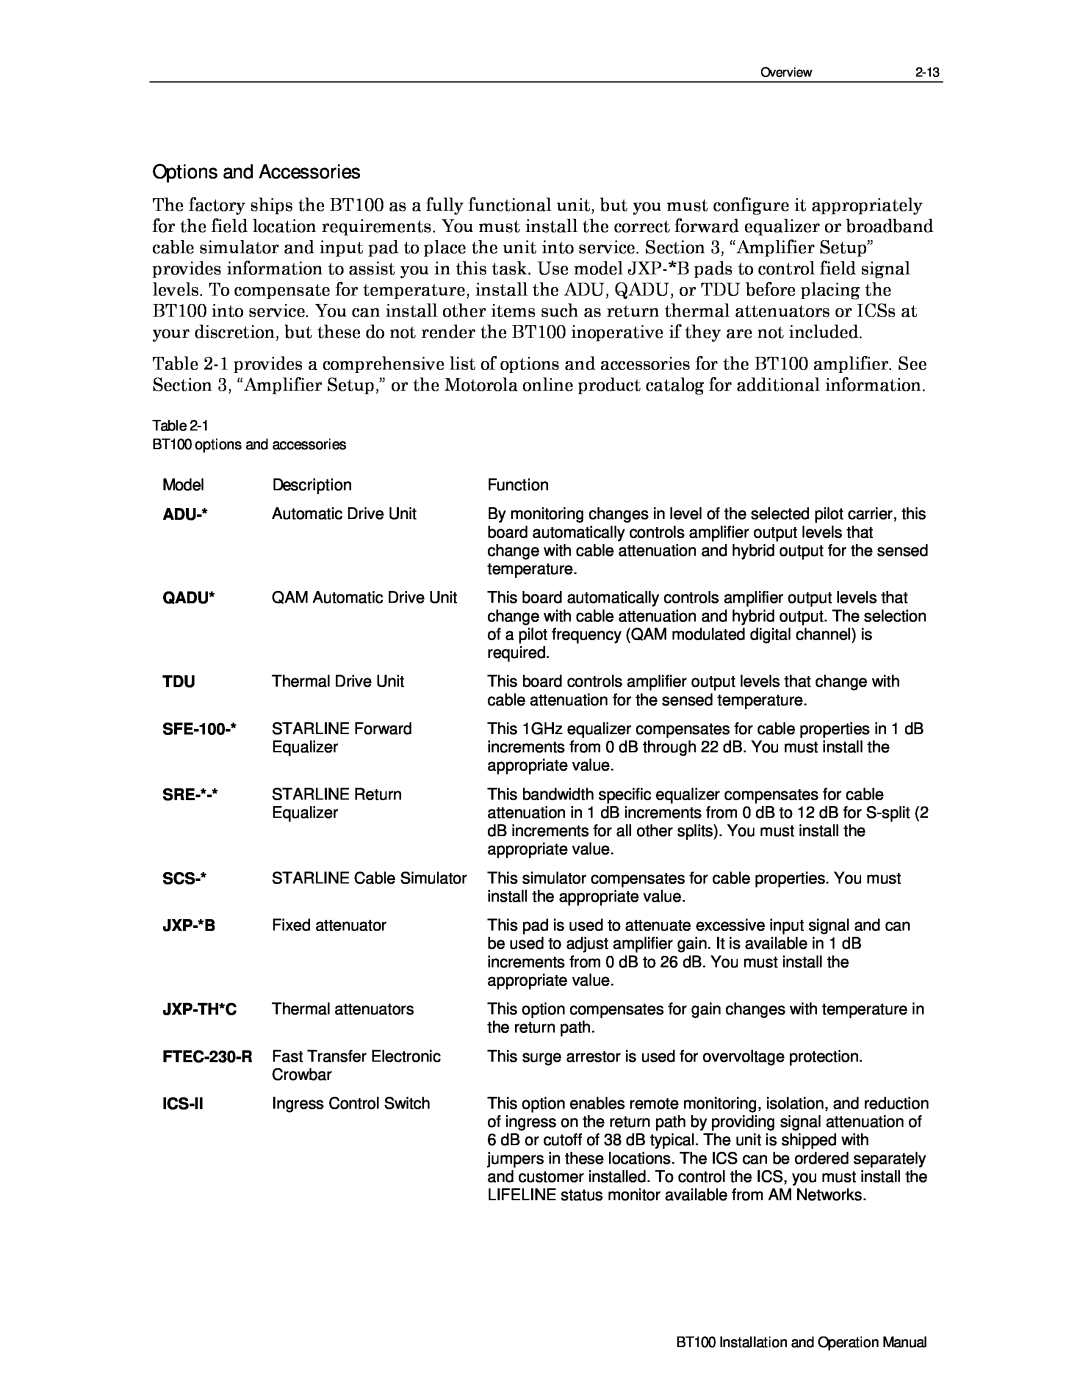 Motorola BT100 operation manual Options and Accessories, Model, Description, Function 